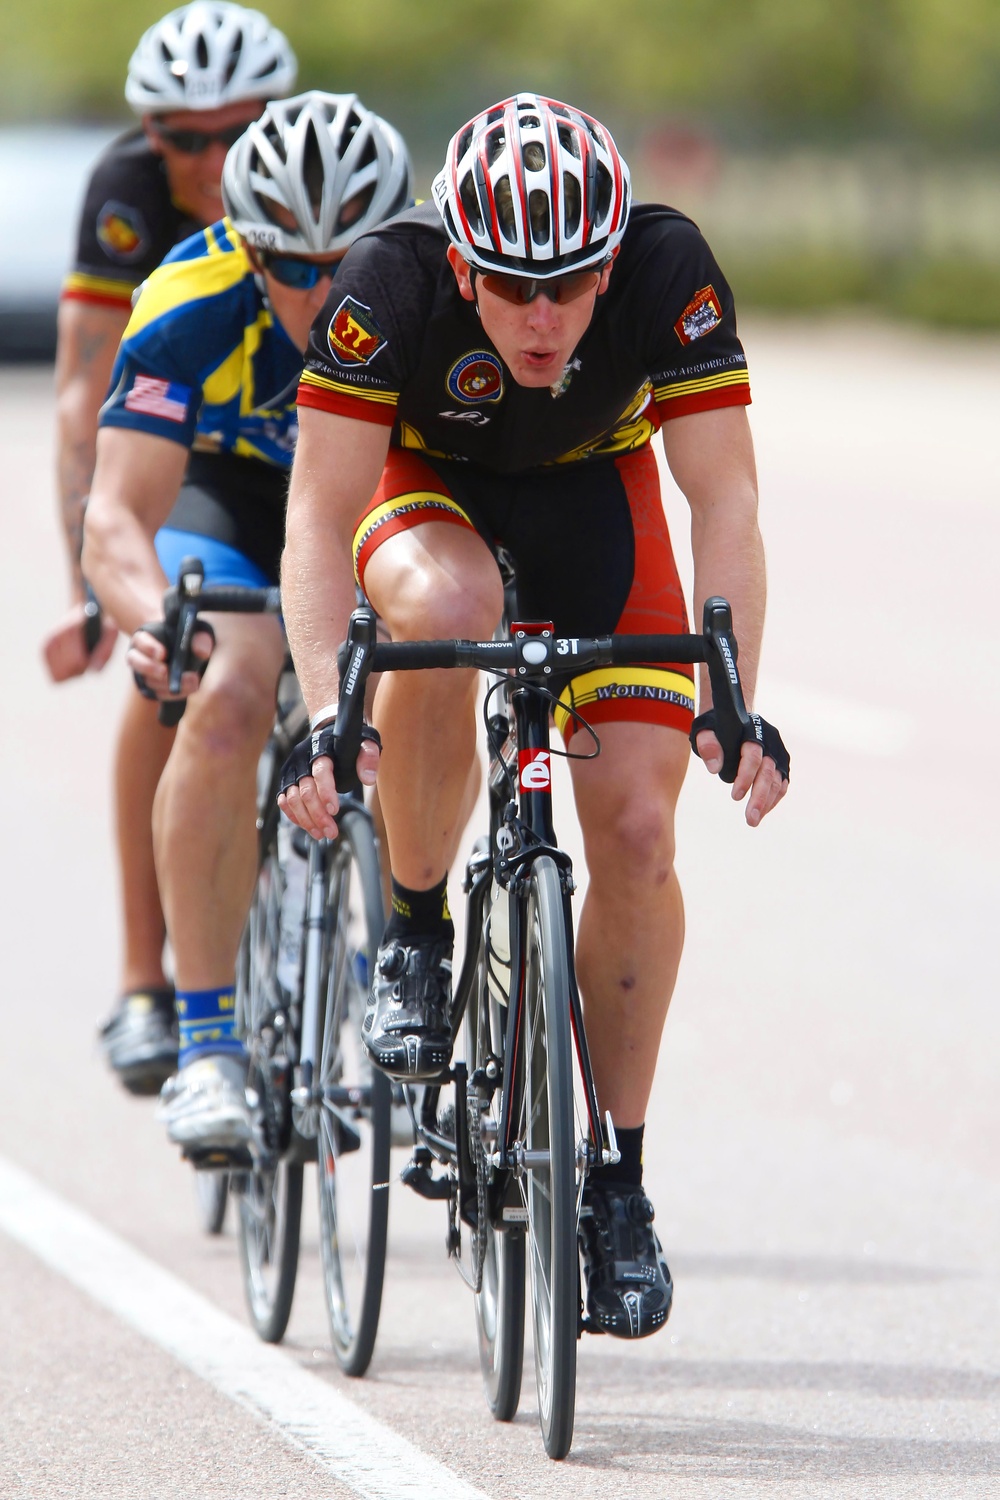 Marine cycling team wins big at Warrior Games